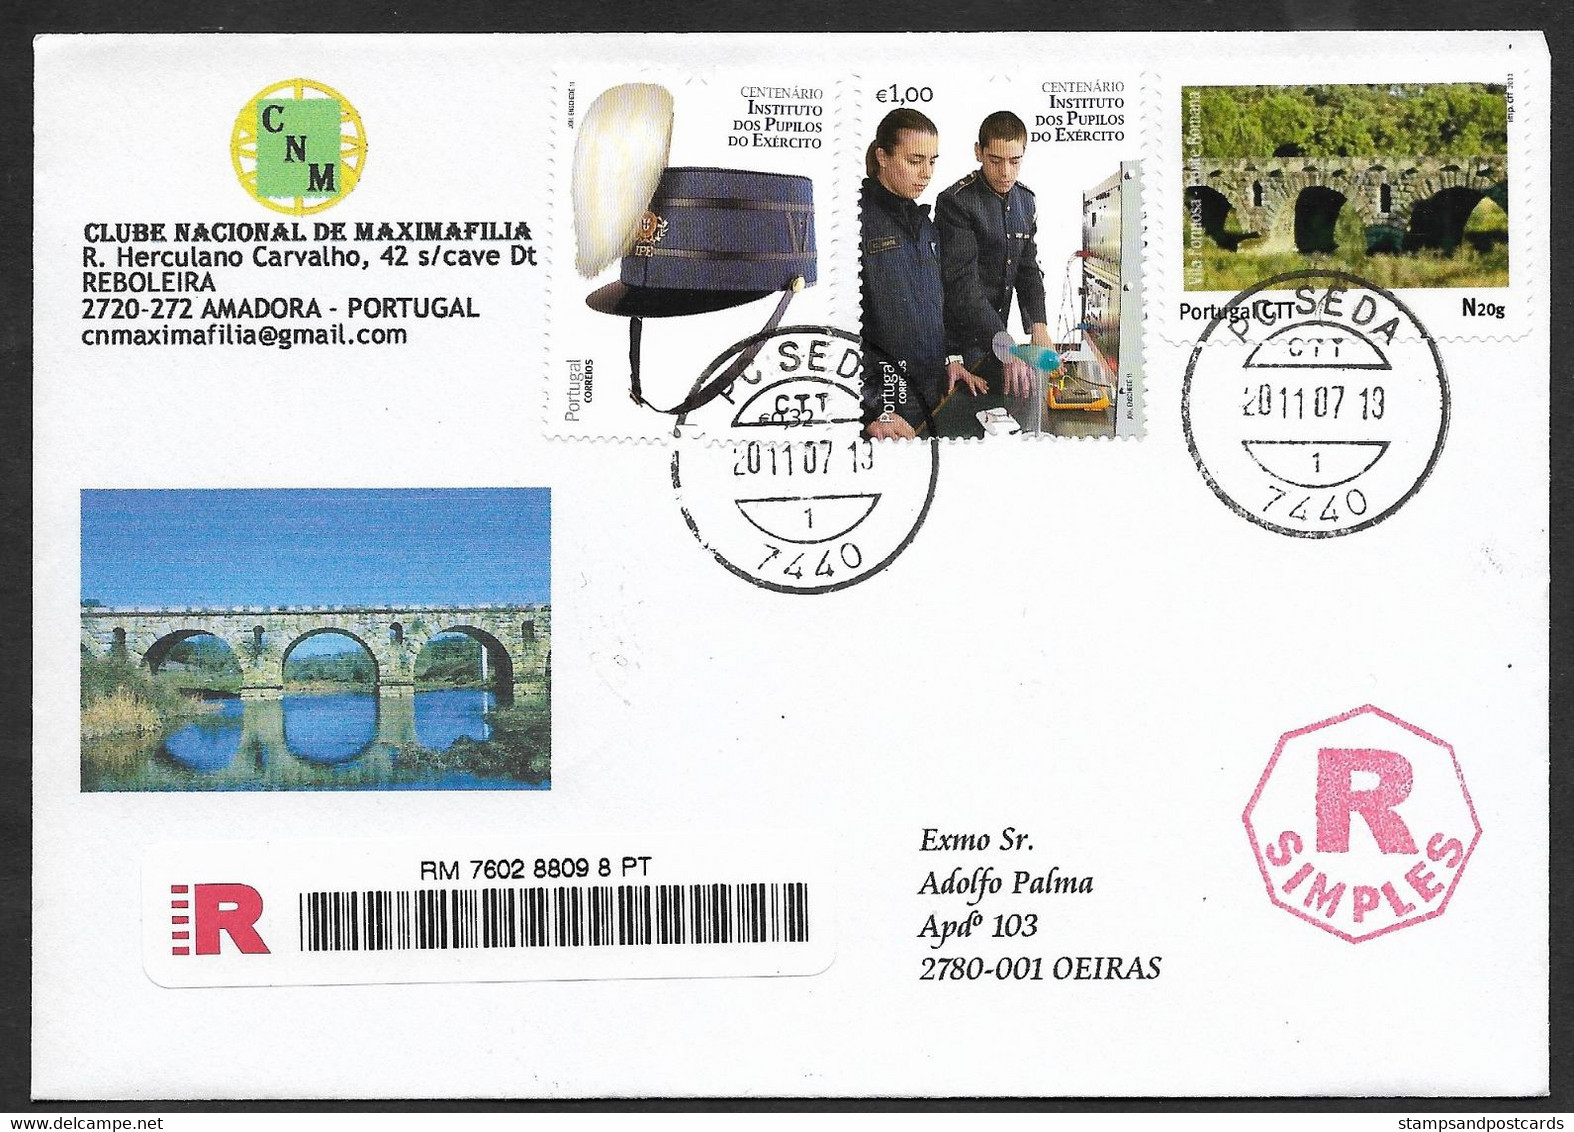 Portugal Lettre R Timbre Personnalisé Pont Romain Seda Alter Do Chão Roman Bridge Personalized Stamp R Cover - Storia Postale